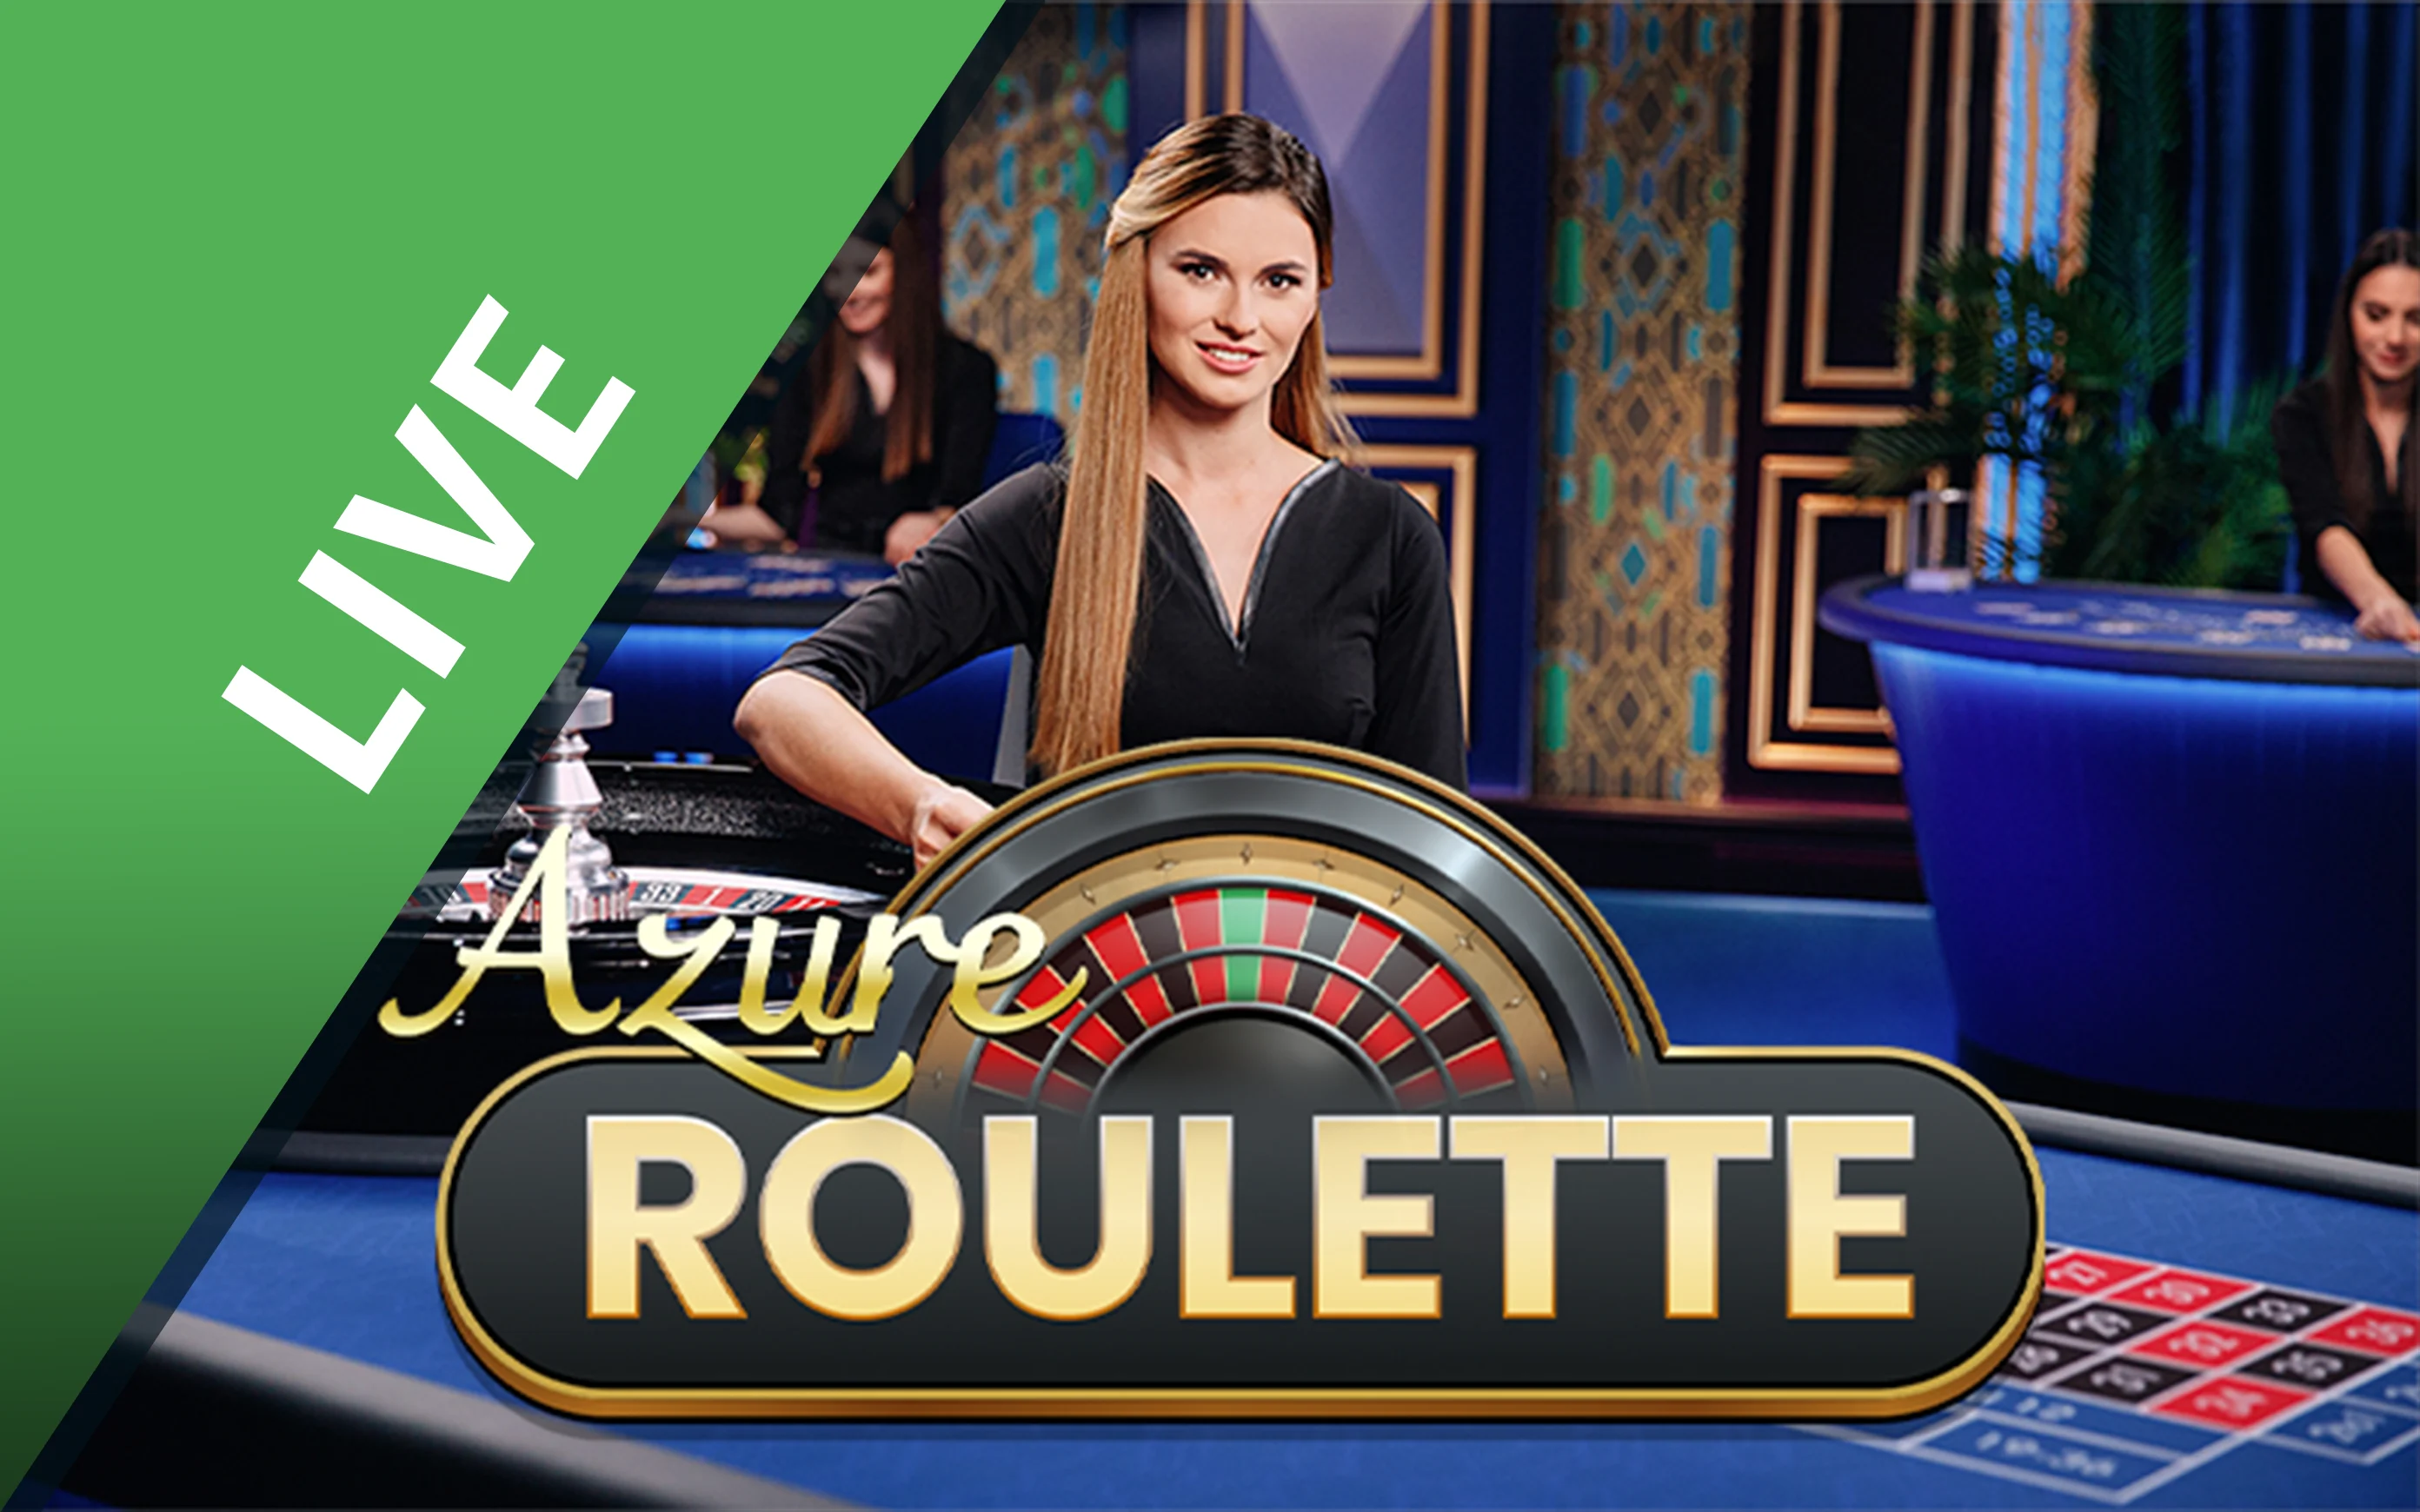 Play Roulette Azure on Starcasino.be online casino